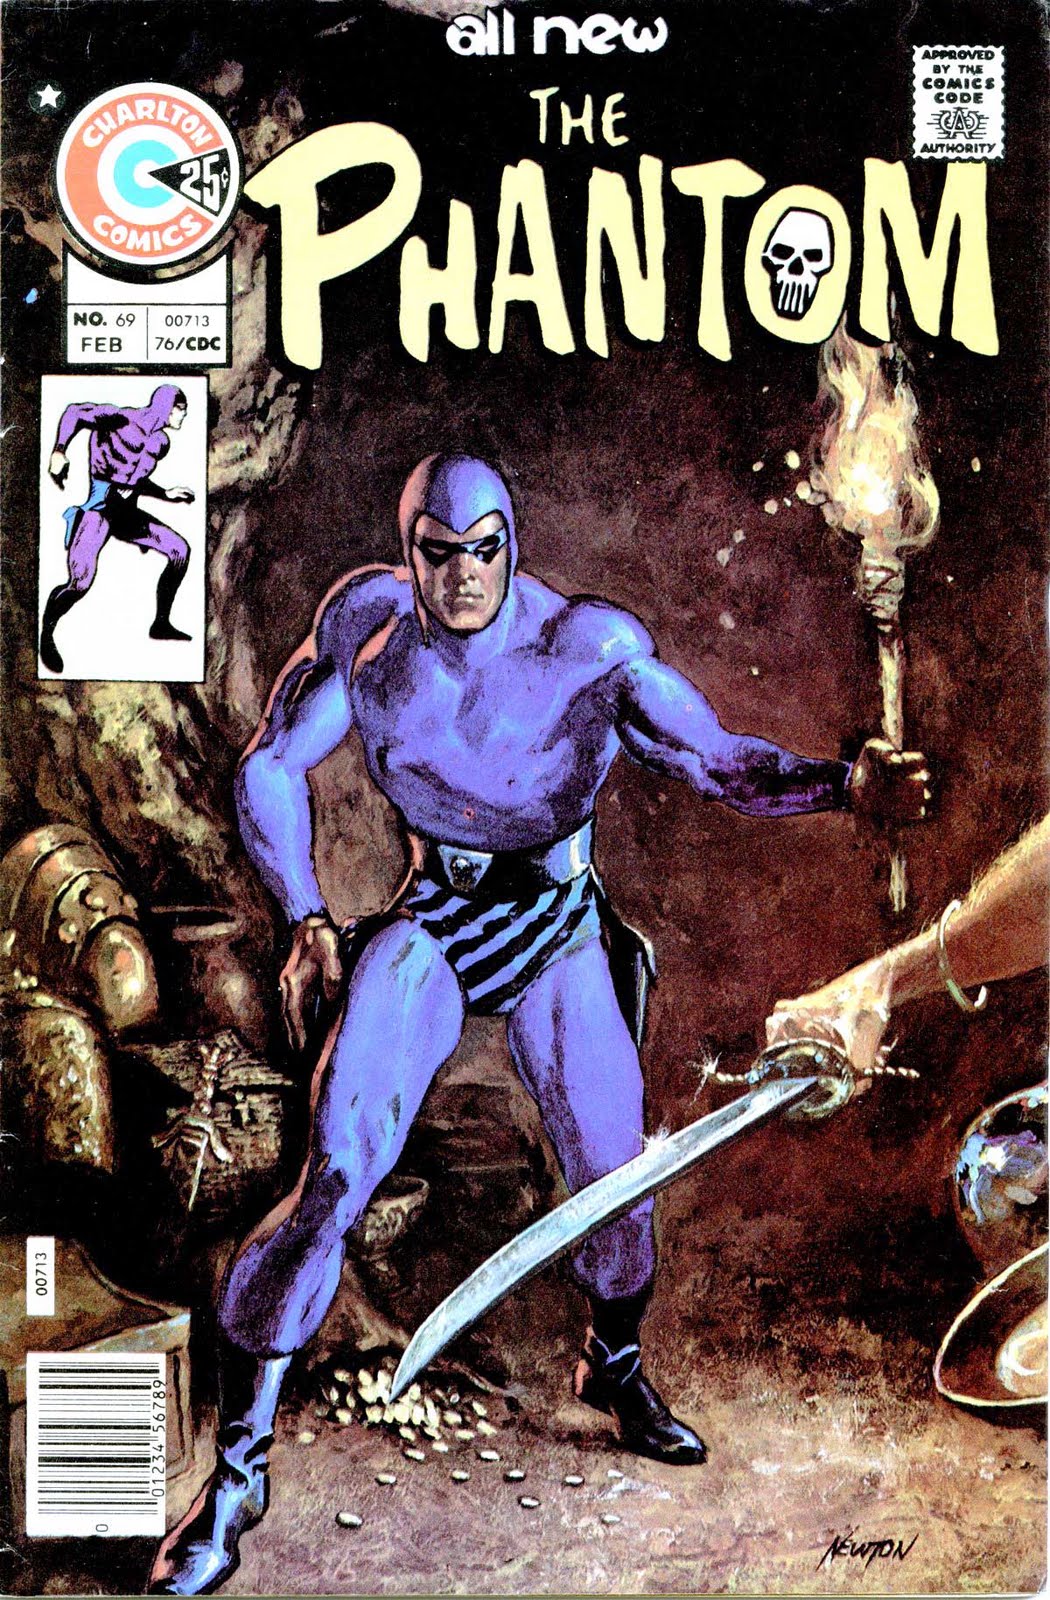 The Phantom v2 #69 charlton comic book cover art by Don Newton